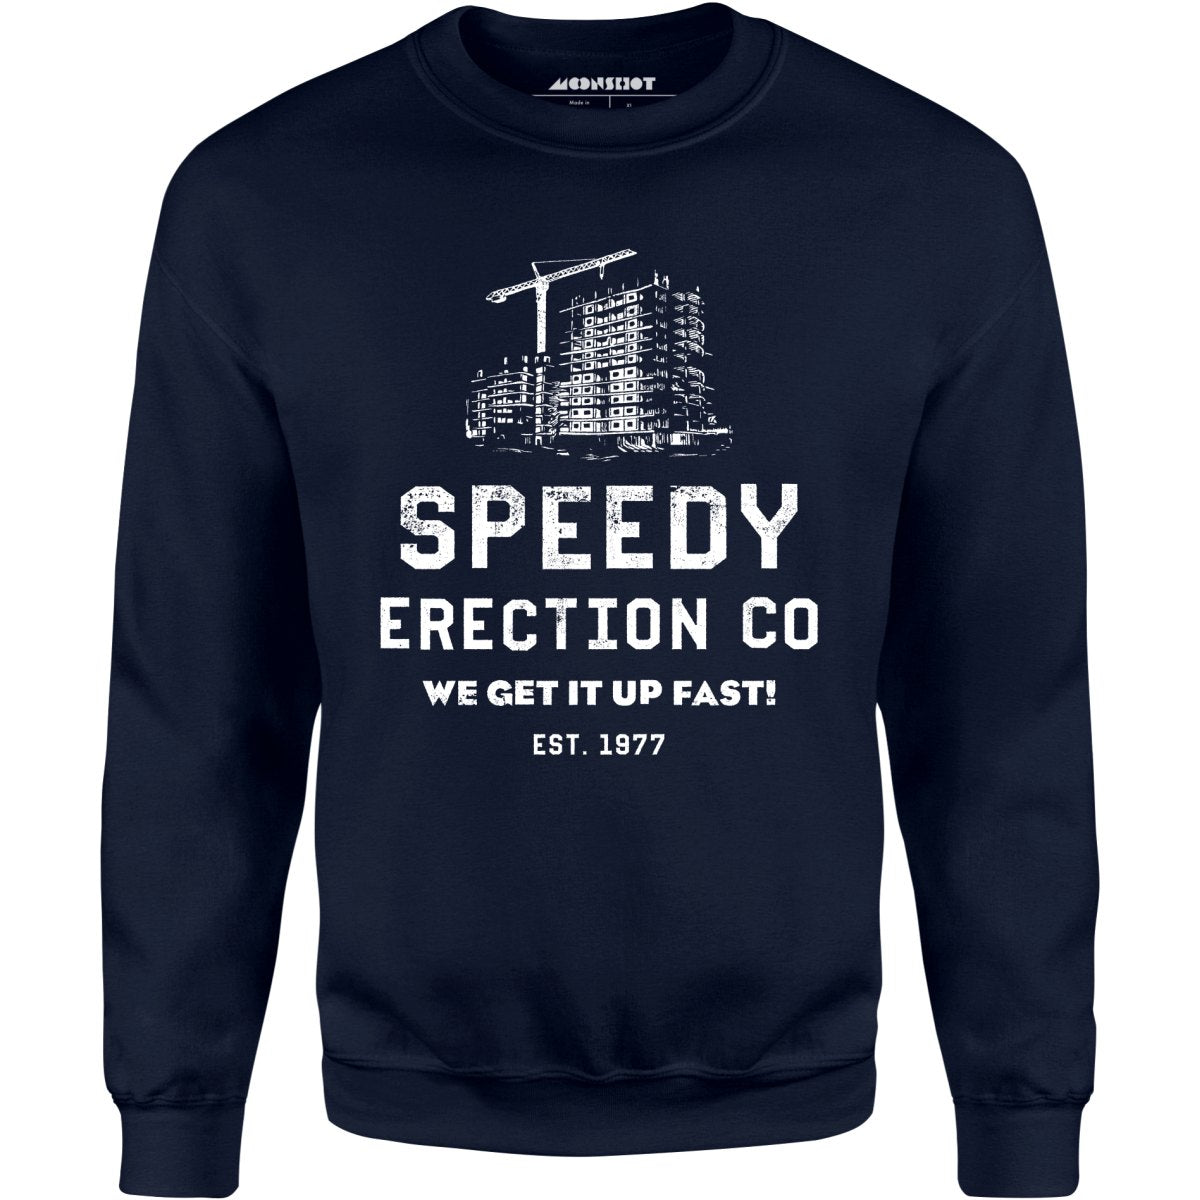 Speedy Erection Co. We Get it Up Fast - Unisex Sweatshirt